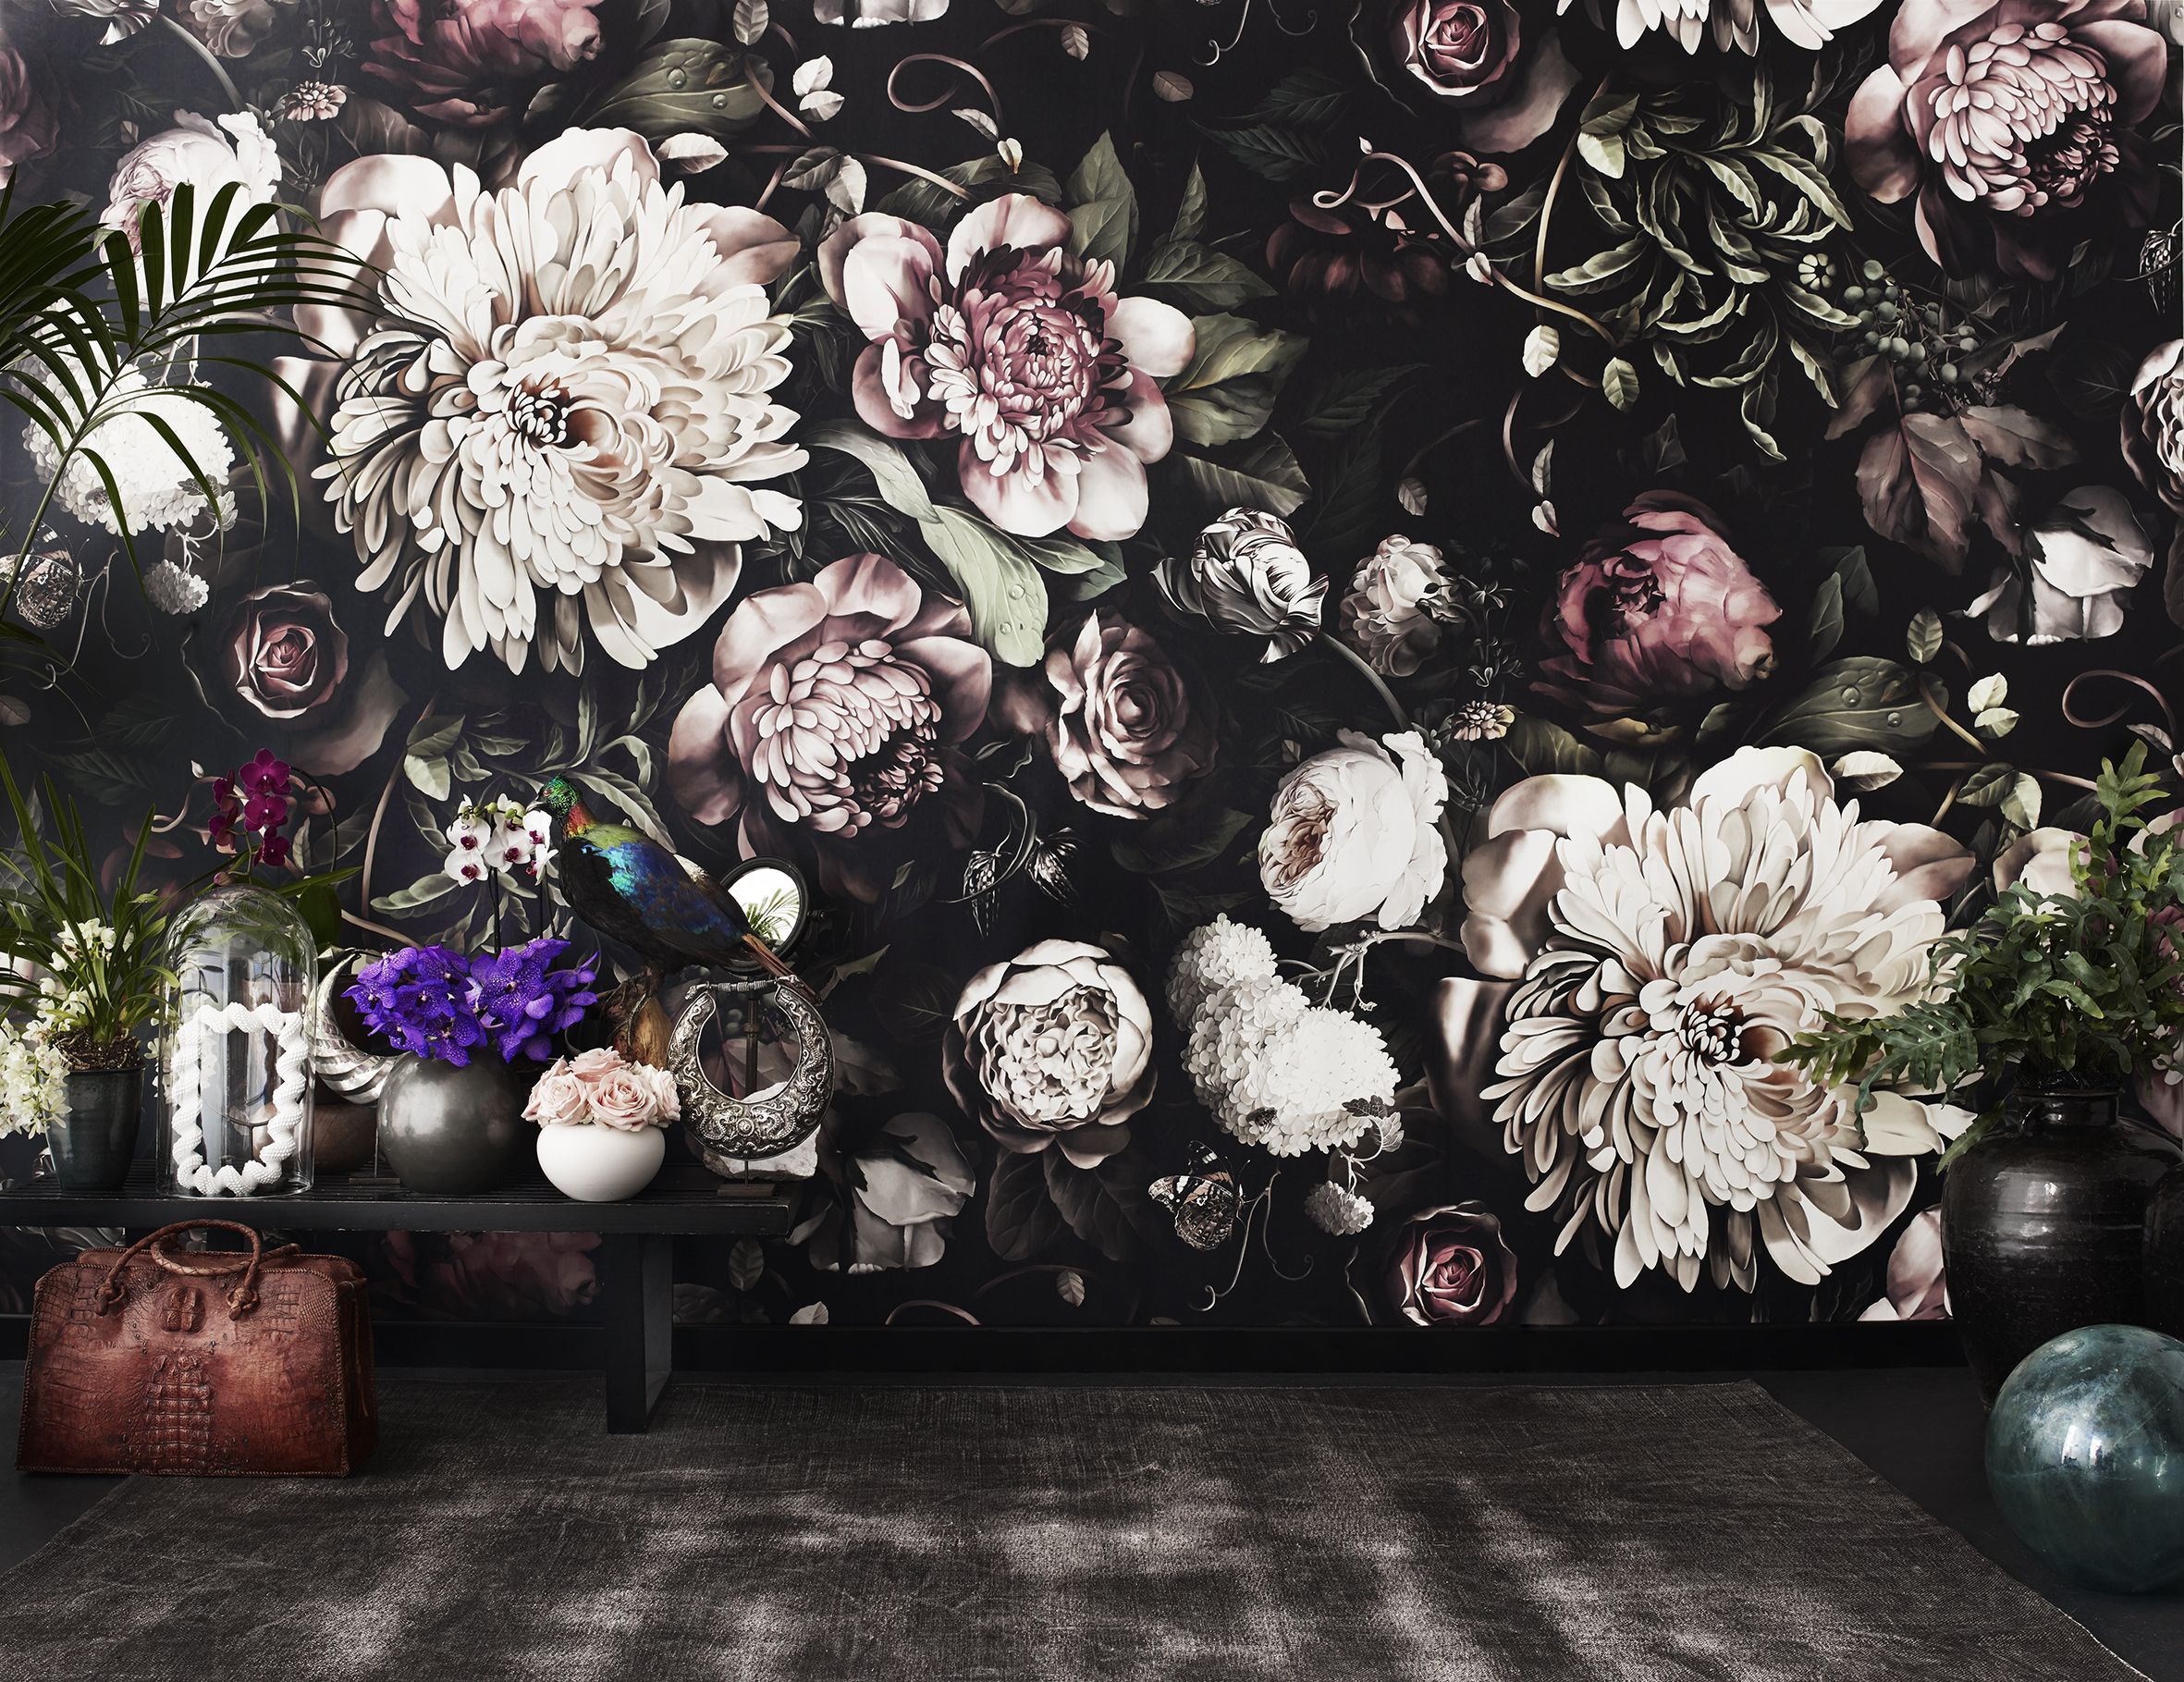 Ovoin Modern Large Floral Wallpaper Roll Art Elegant Blooming Flower Wall  Paper Bedroom Decor 053